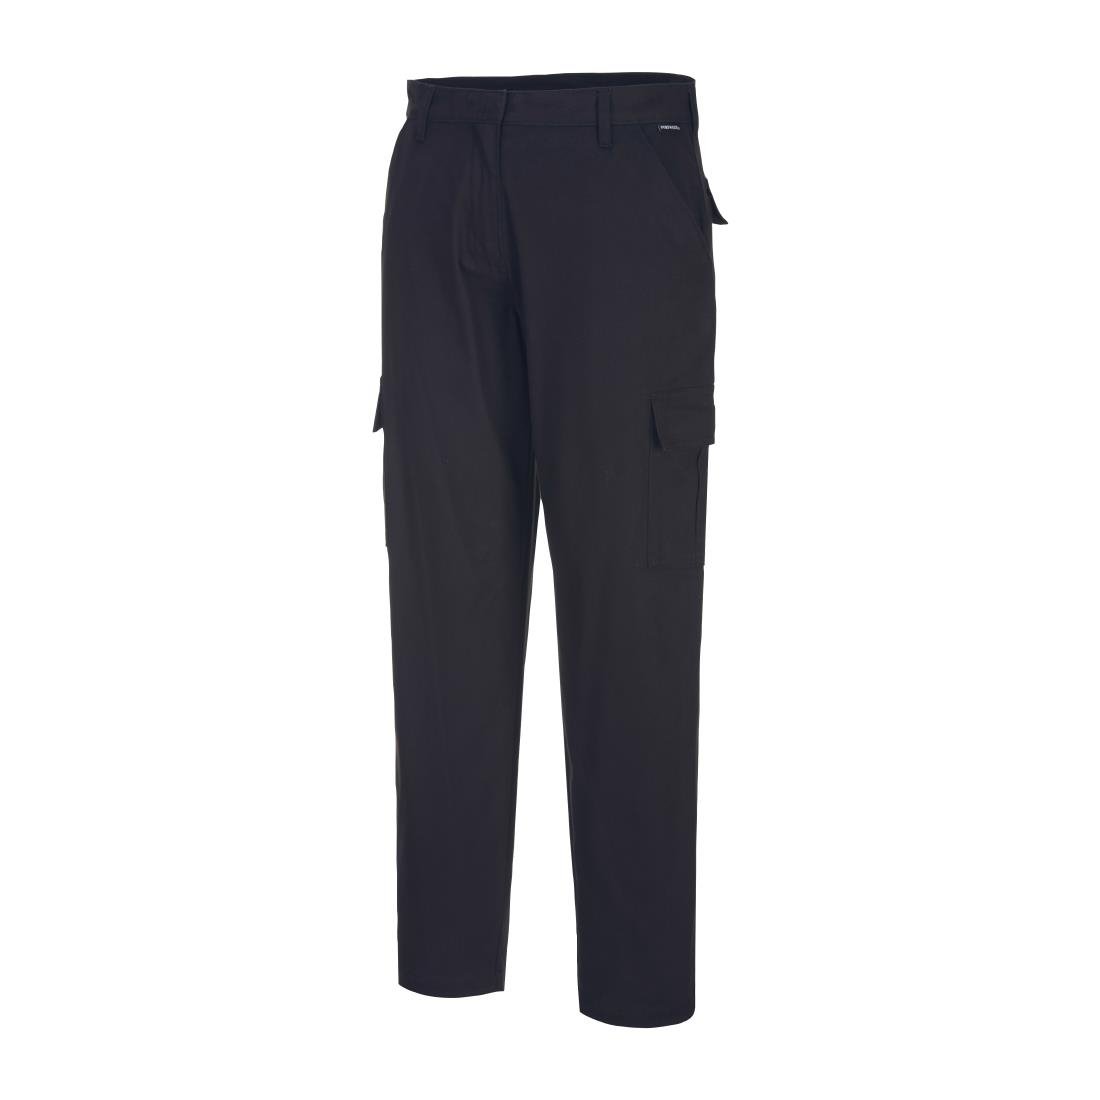 BA088-18 Portwest Eco Women's Stretch Cargo Trousers Black Size 18